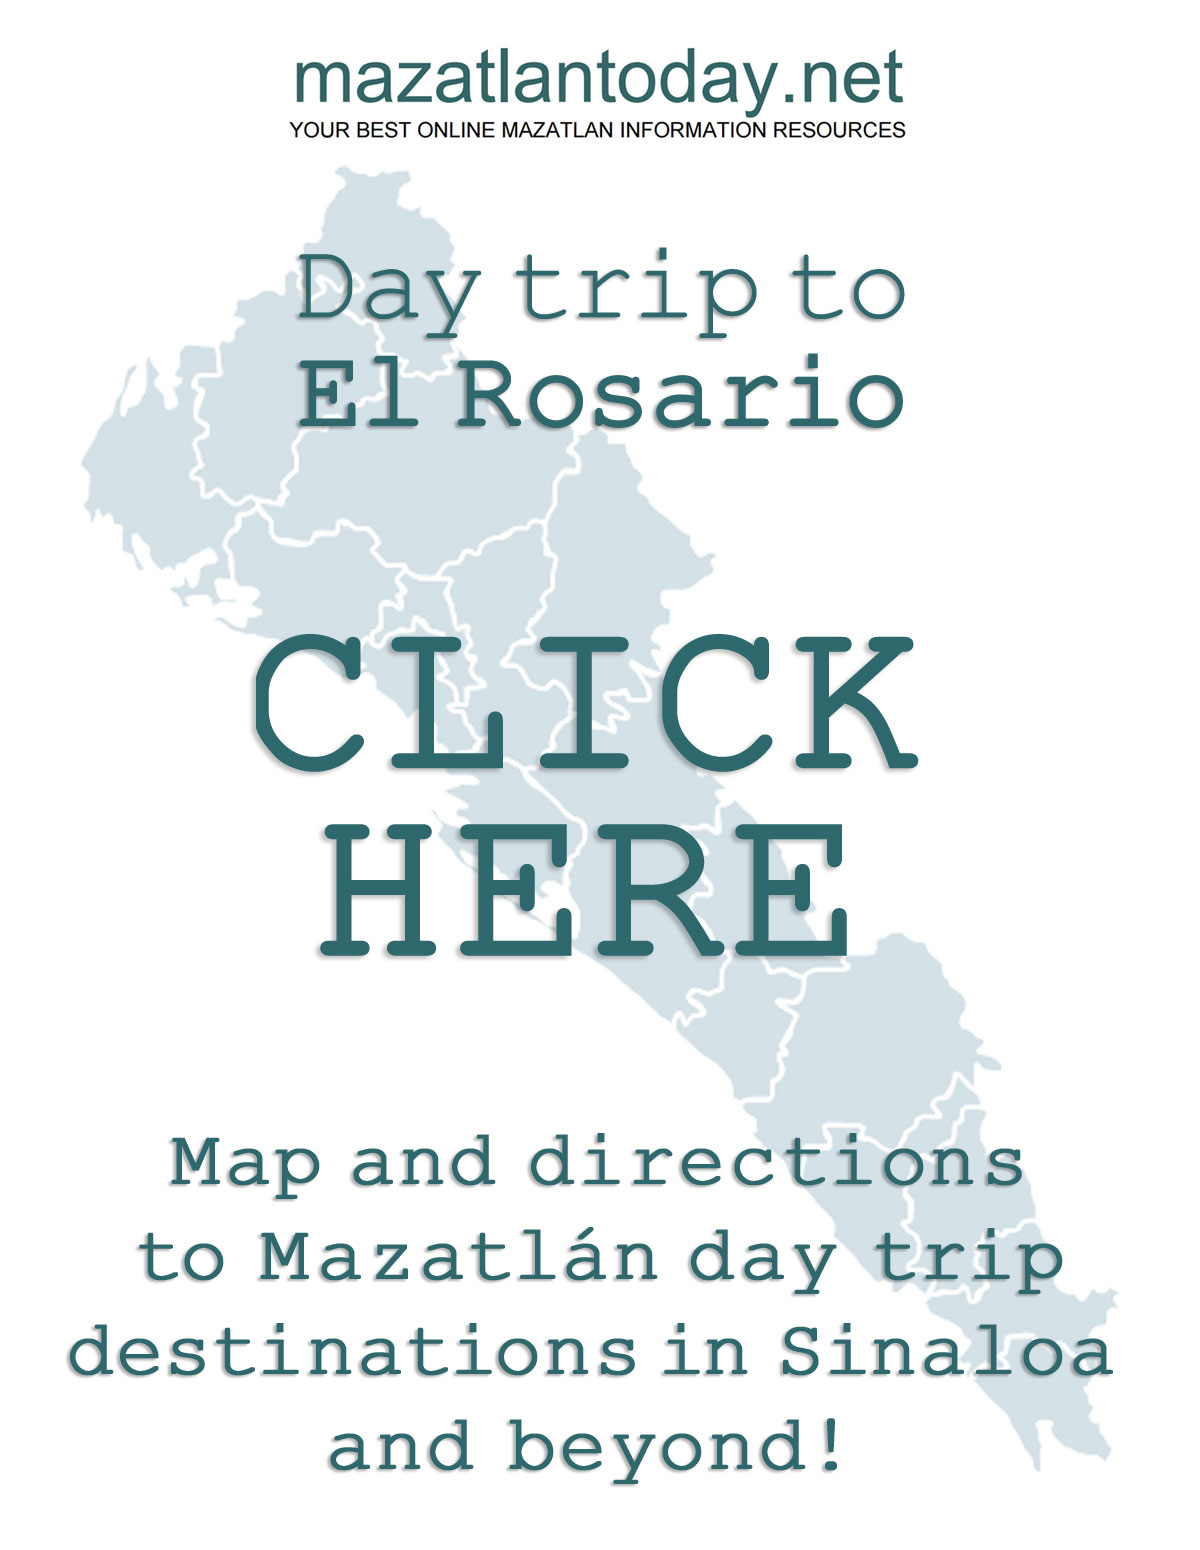 Download free Mazatlan - El Rosario day trip map and directions